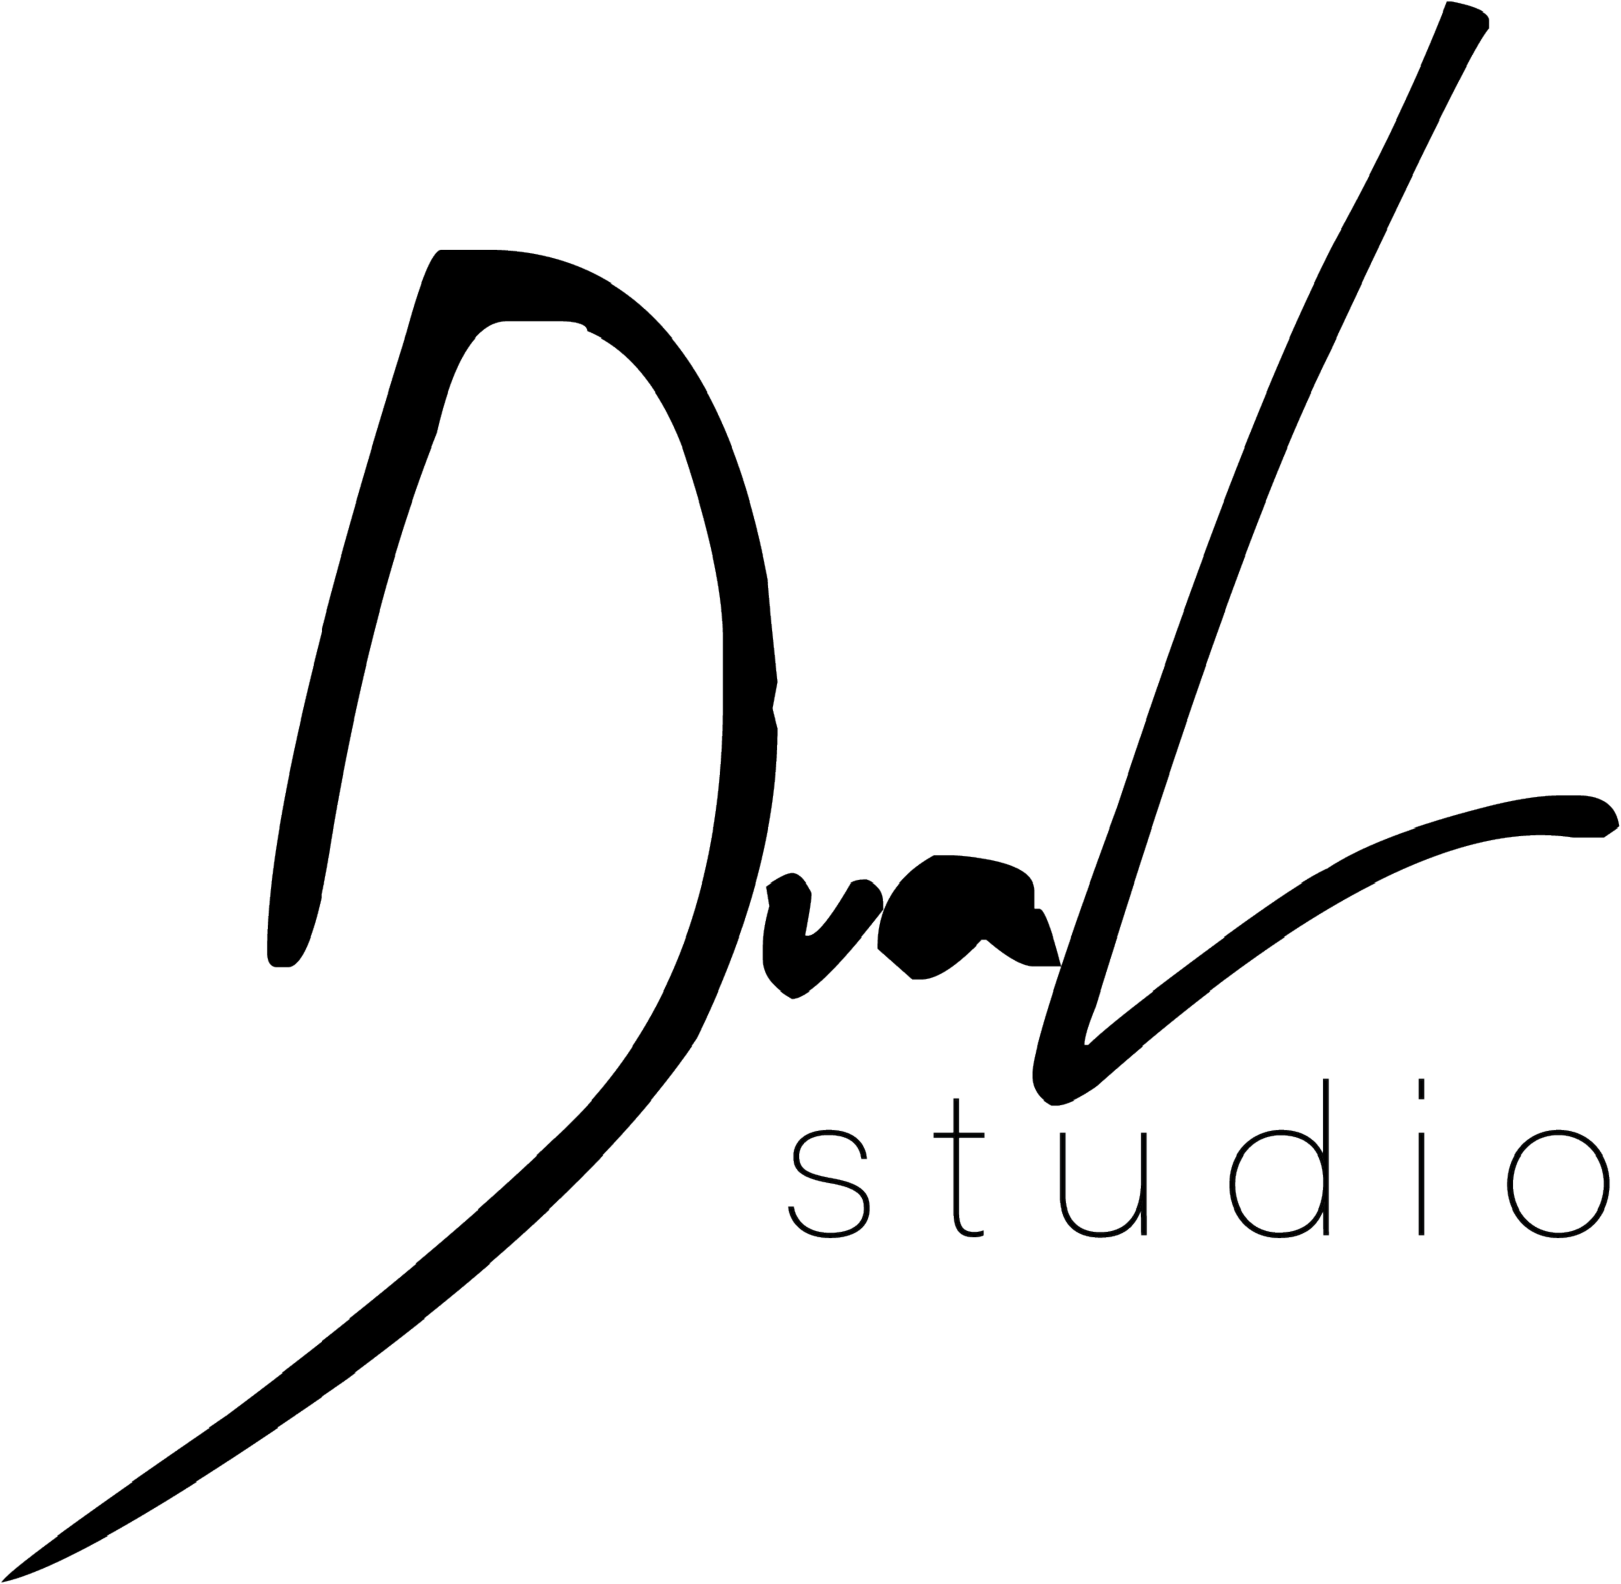 Dual studio